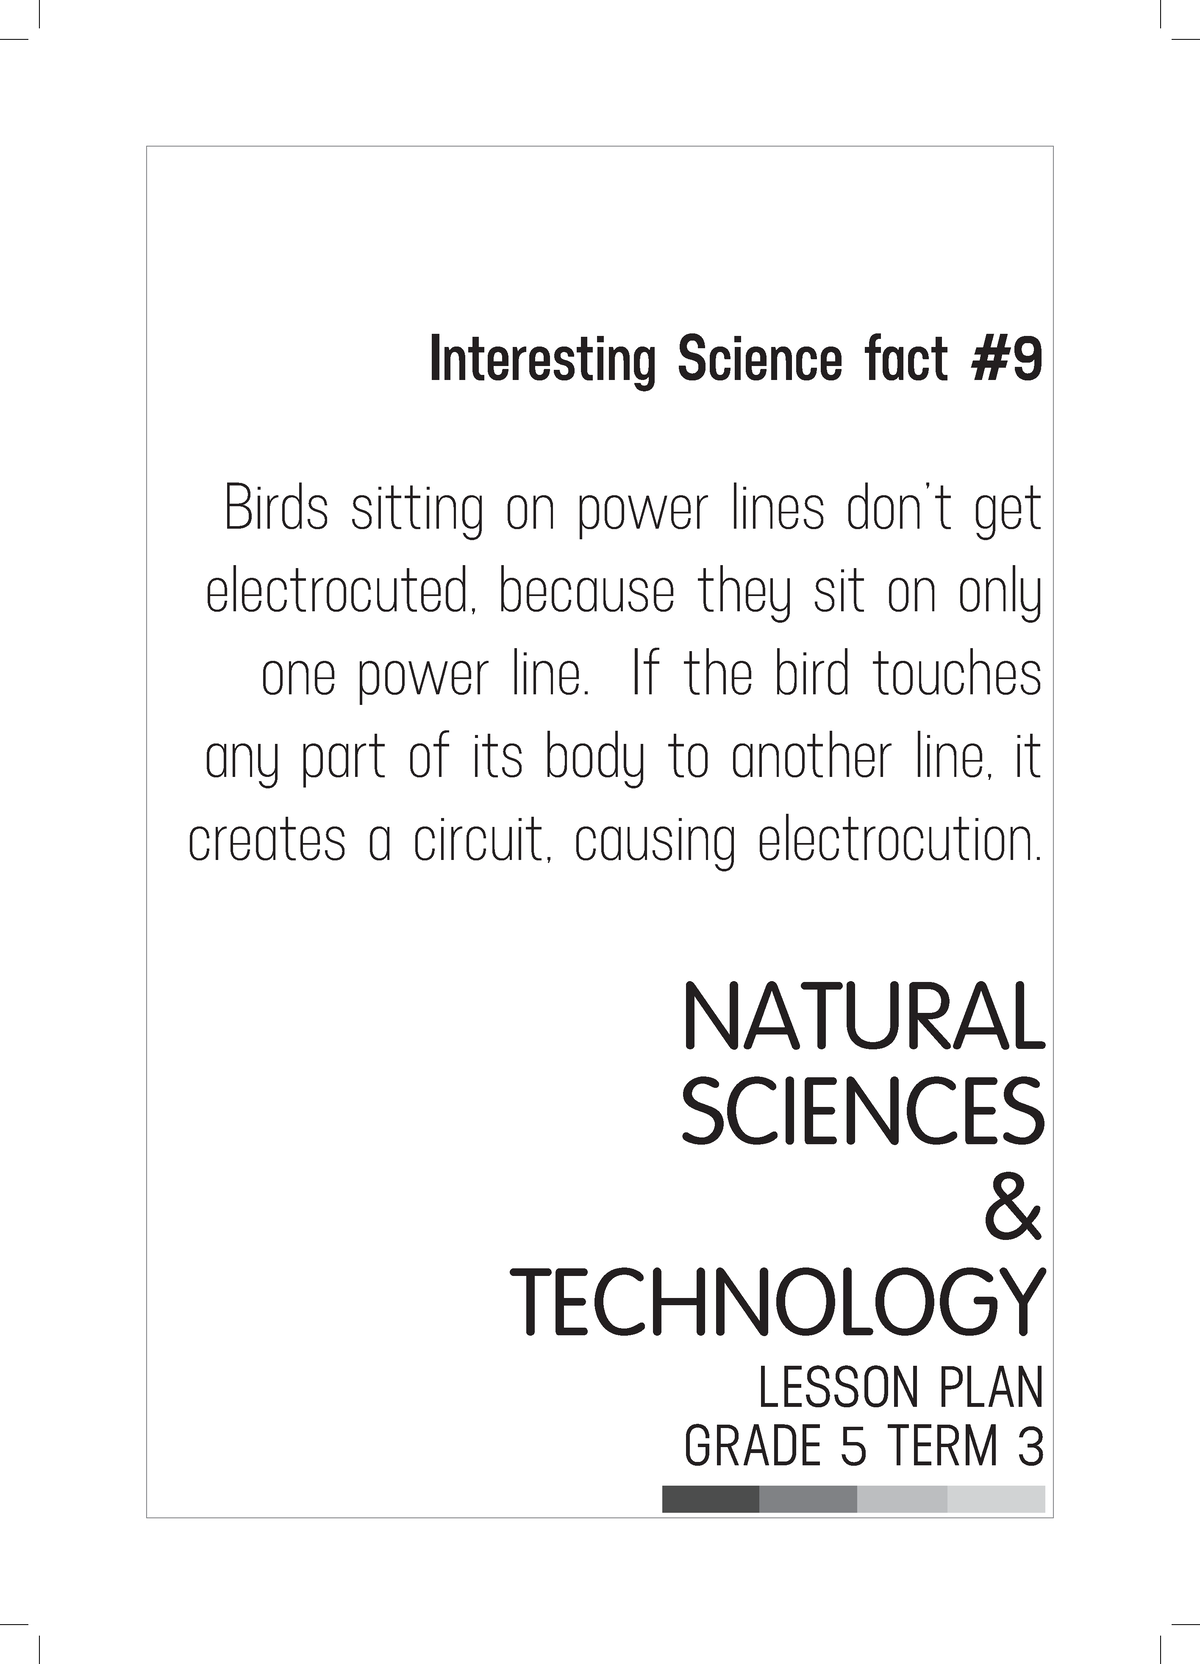 gr 5 term 3 2019 natural sciences and technology lesson plans interesting science fact birds studocu